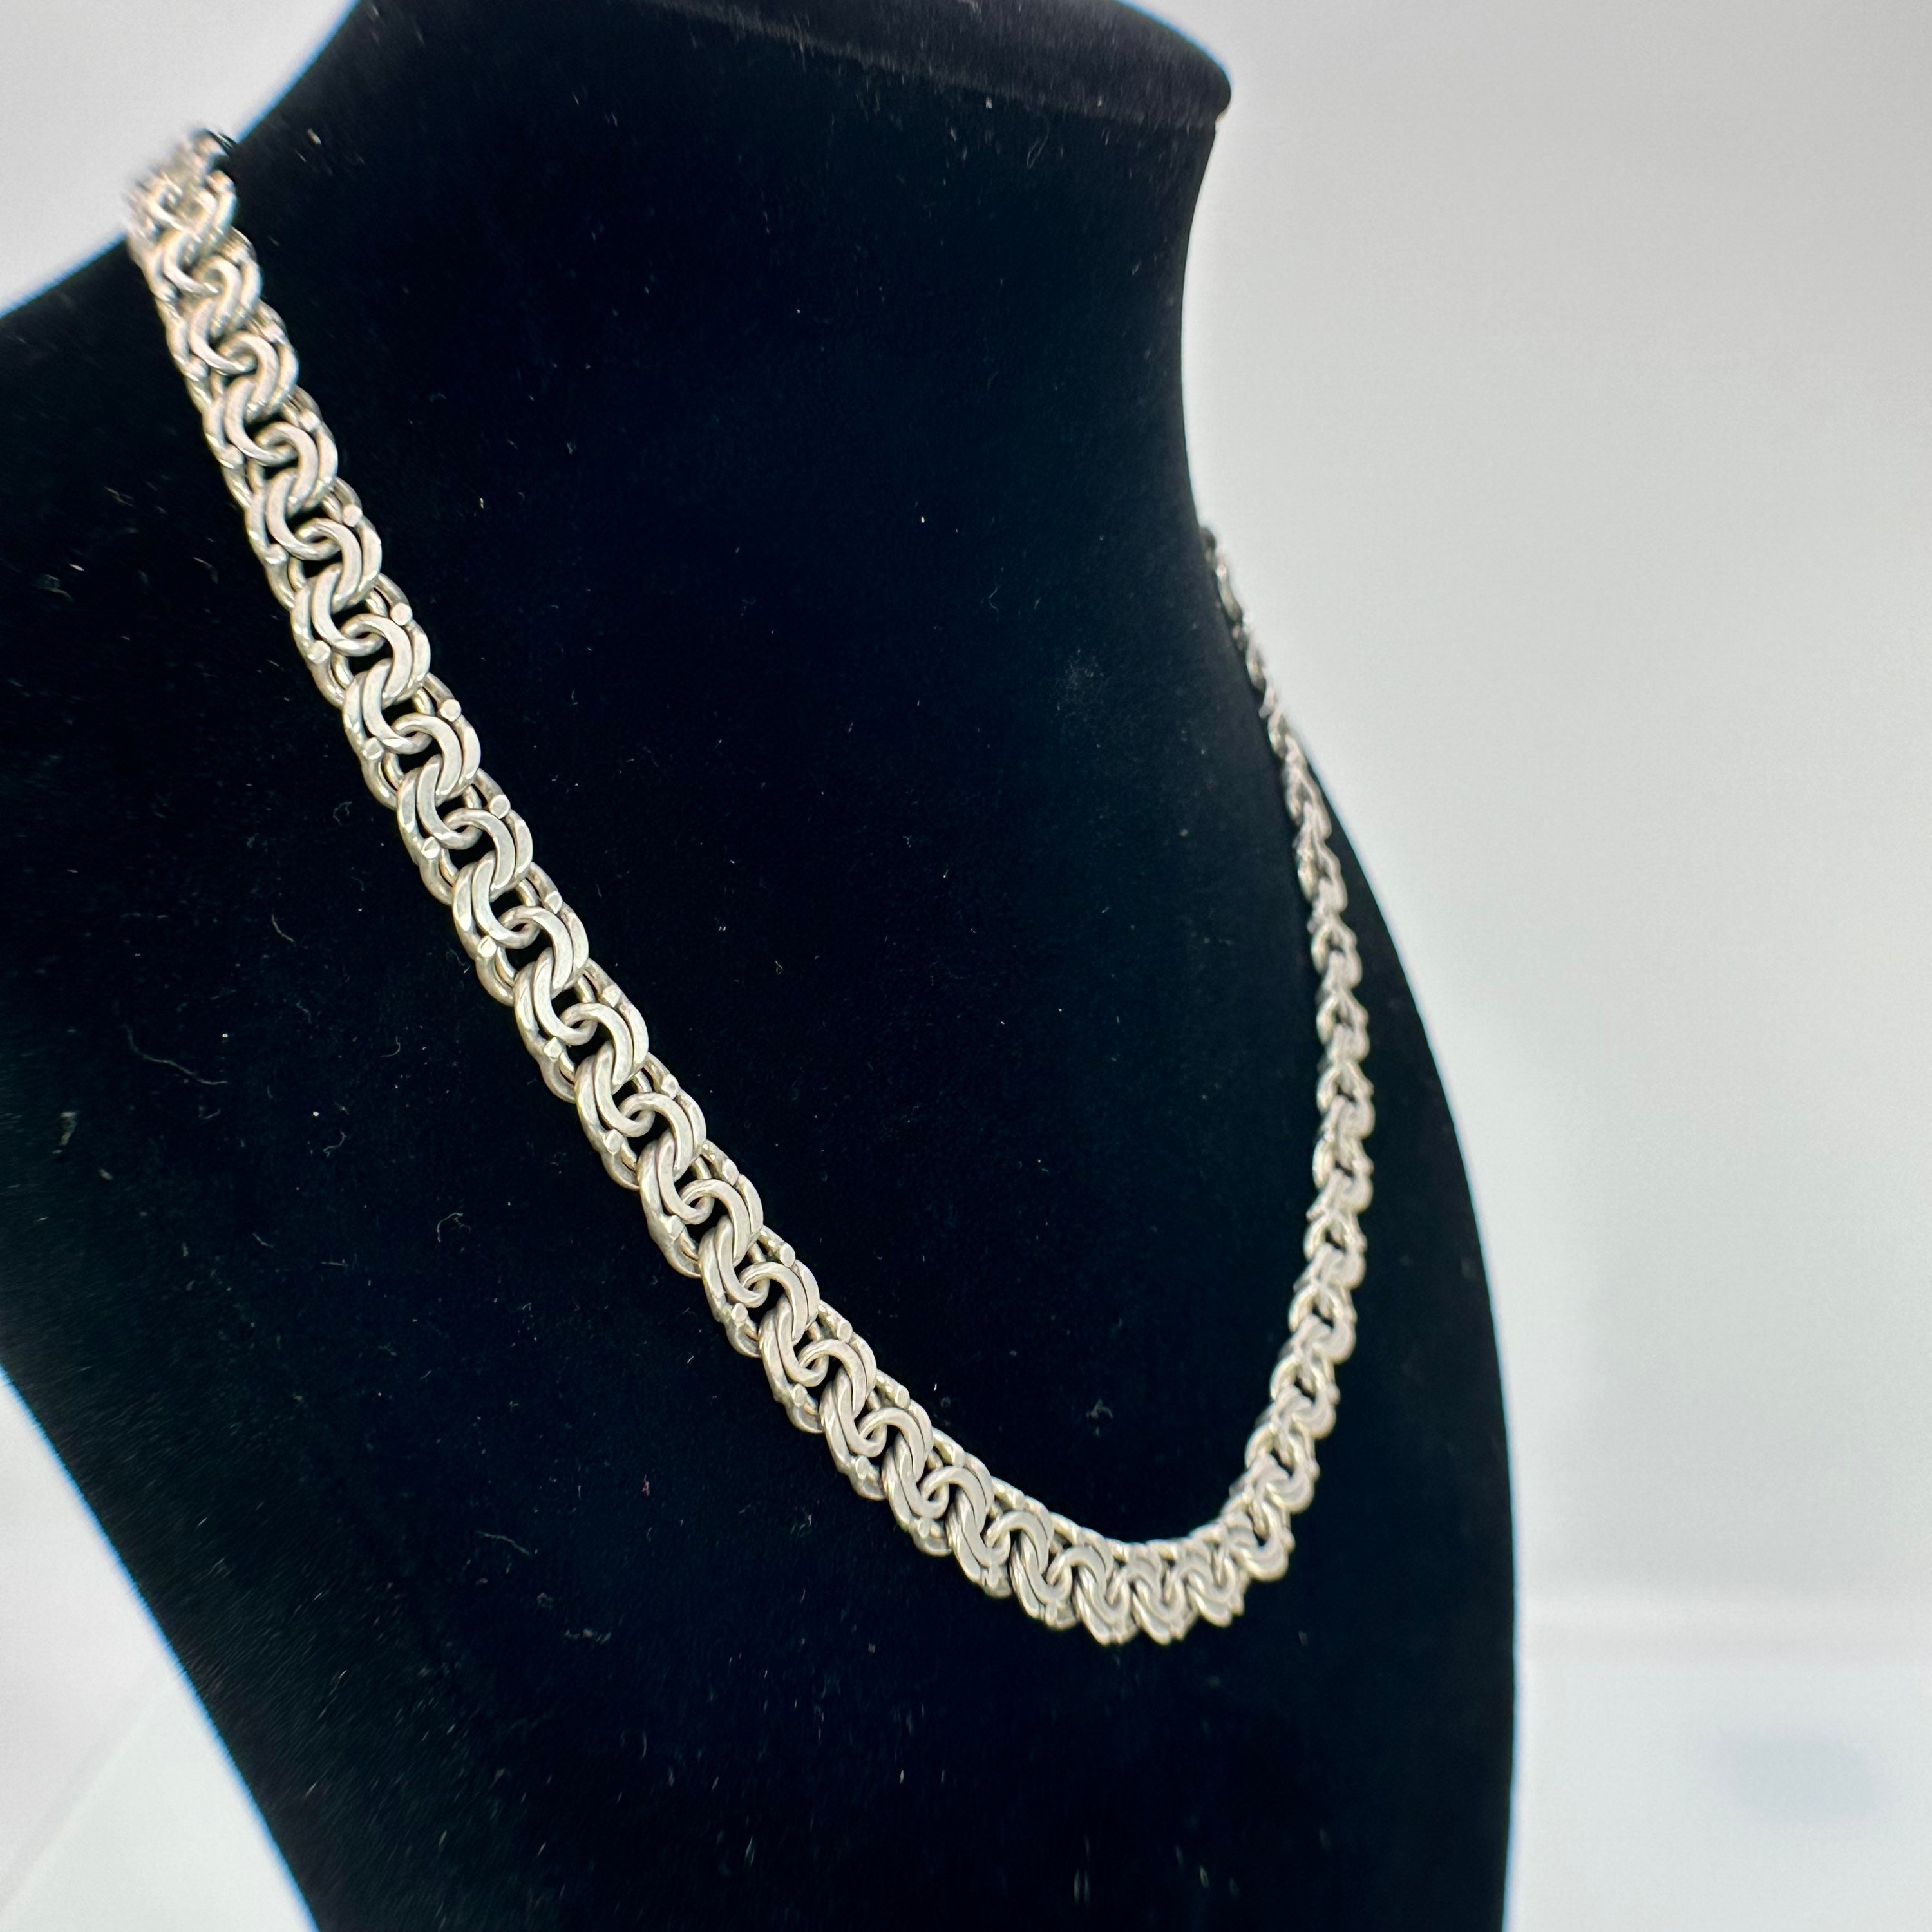 Silver Necklaces for sale in Sexsmith, Alberta | Facebook Marketplace |  Facebook